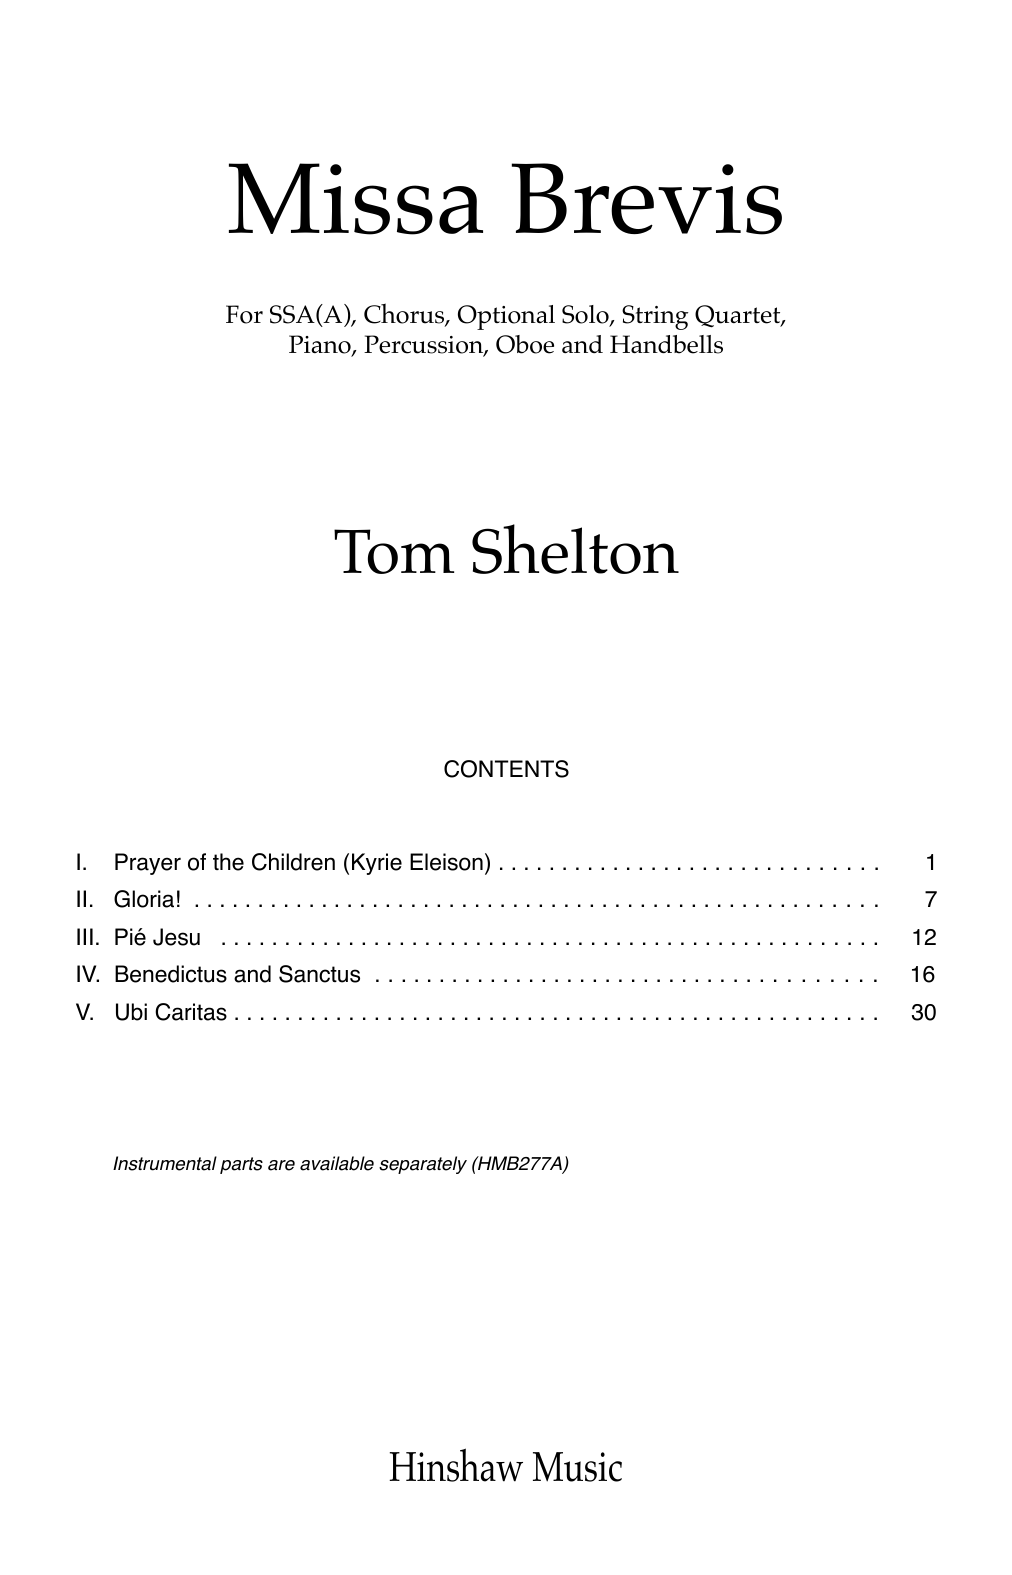 Download Tom Shelton Missa Brevis Sheet Music